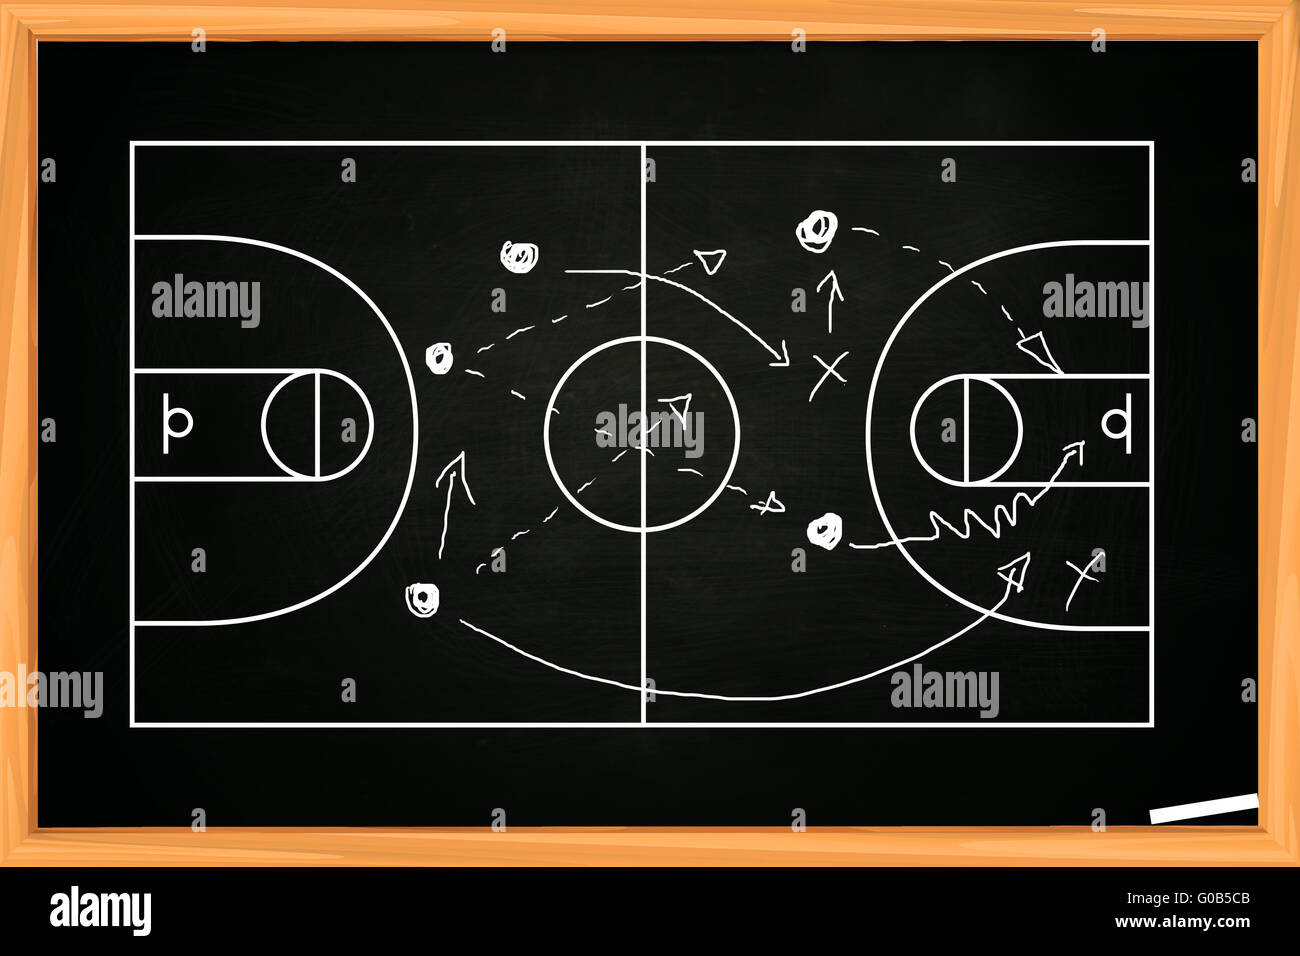 Chalk board drawing of basketball game strategy on blackboard Stock Photo -  Alamy